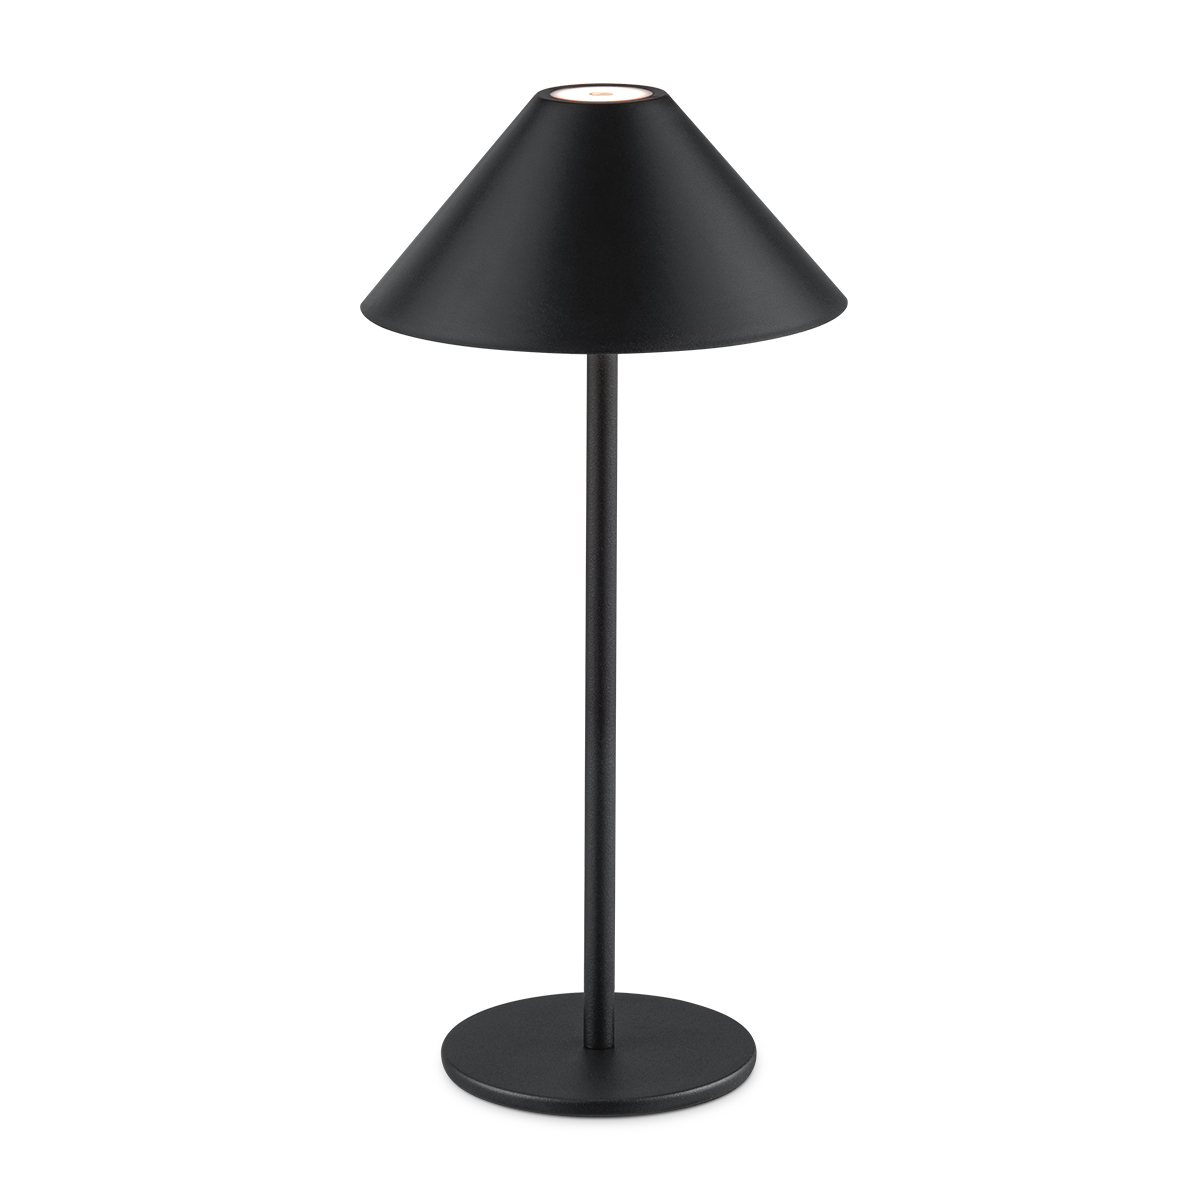 Tangla lighting - TLT7643-01BK - LED table lamp - rechargeable plastic and metal - black - umbrella